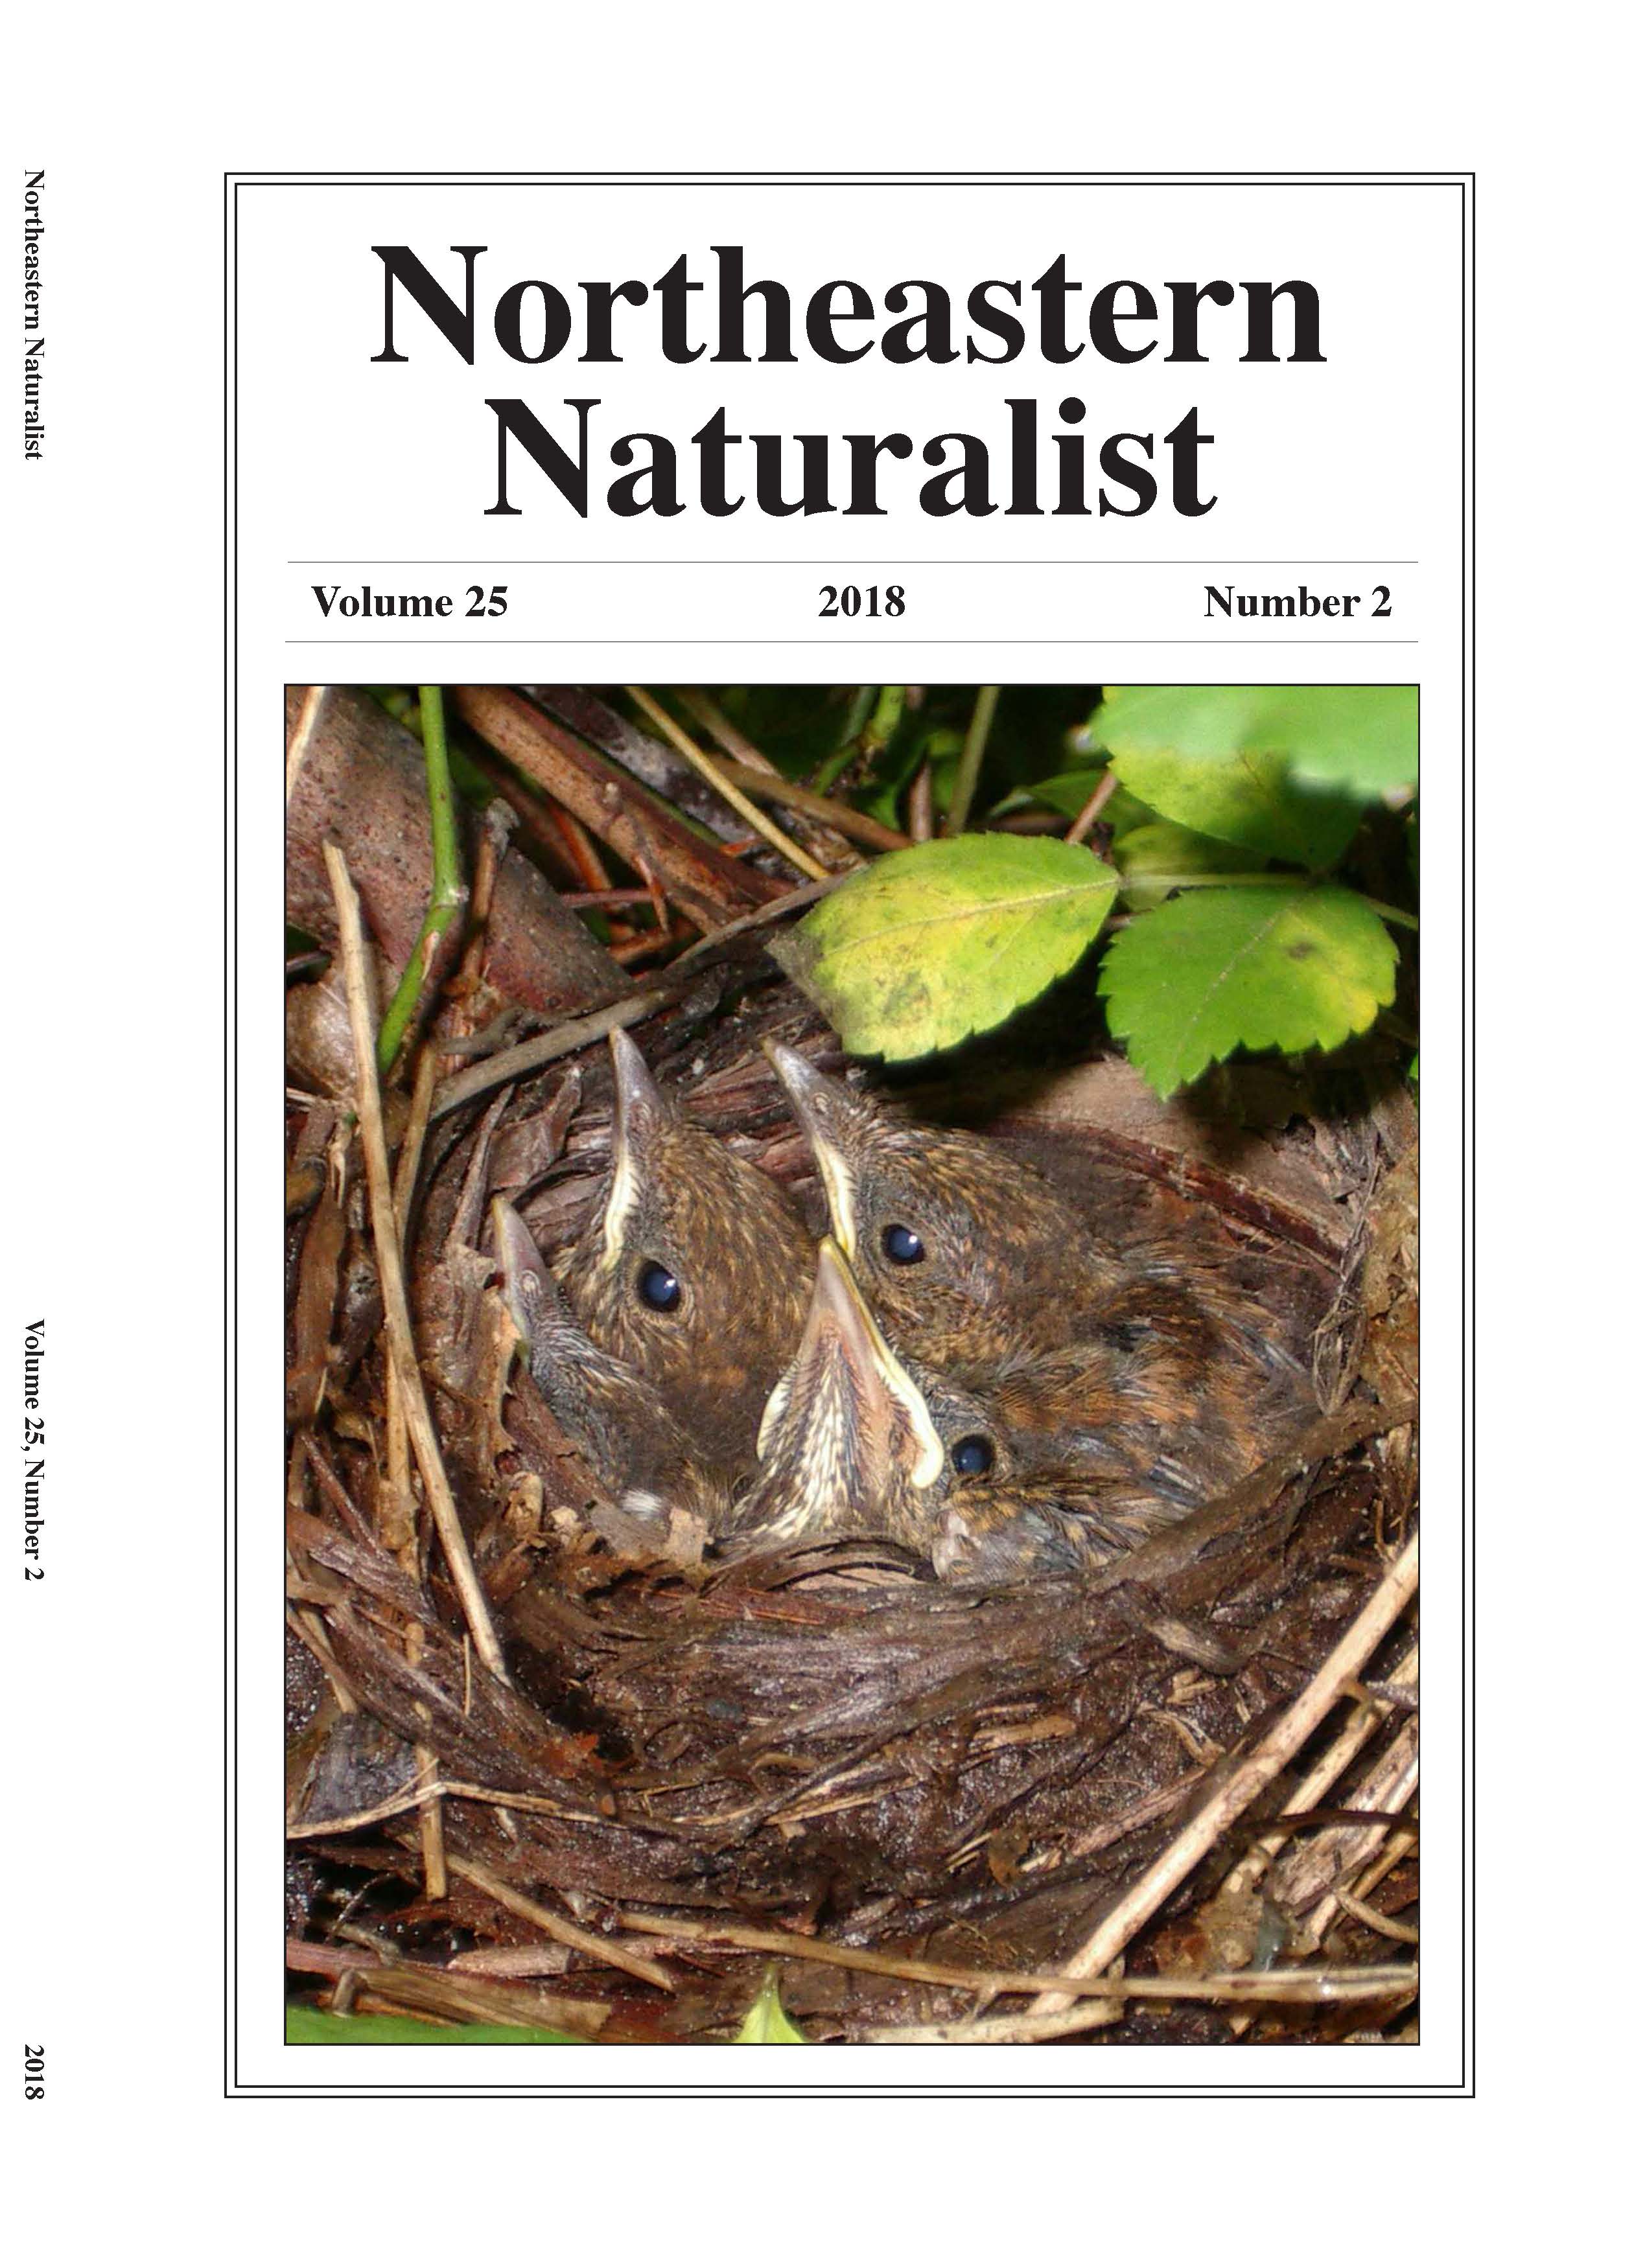 northeastern naturalist cover